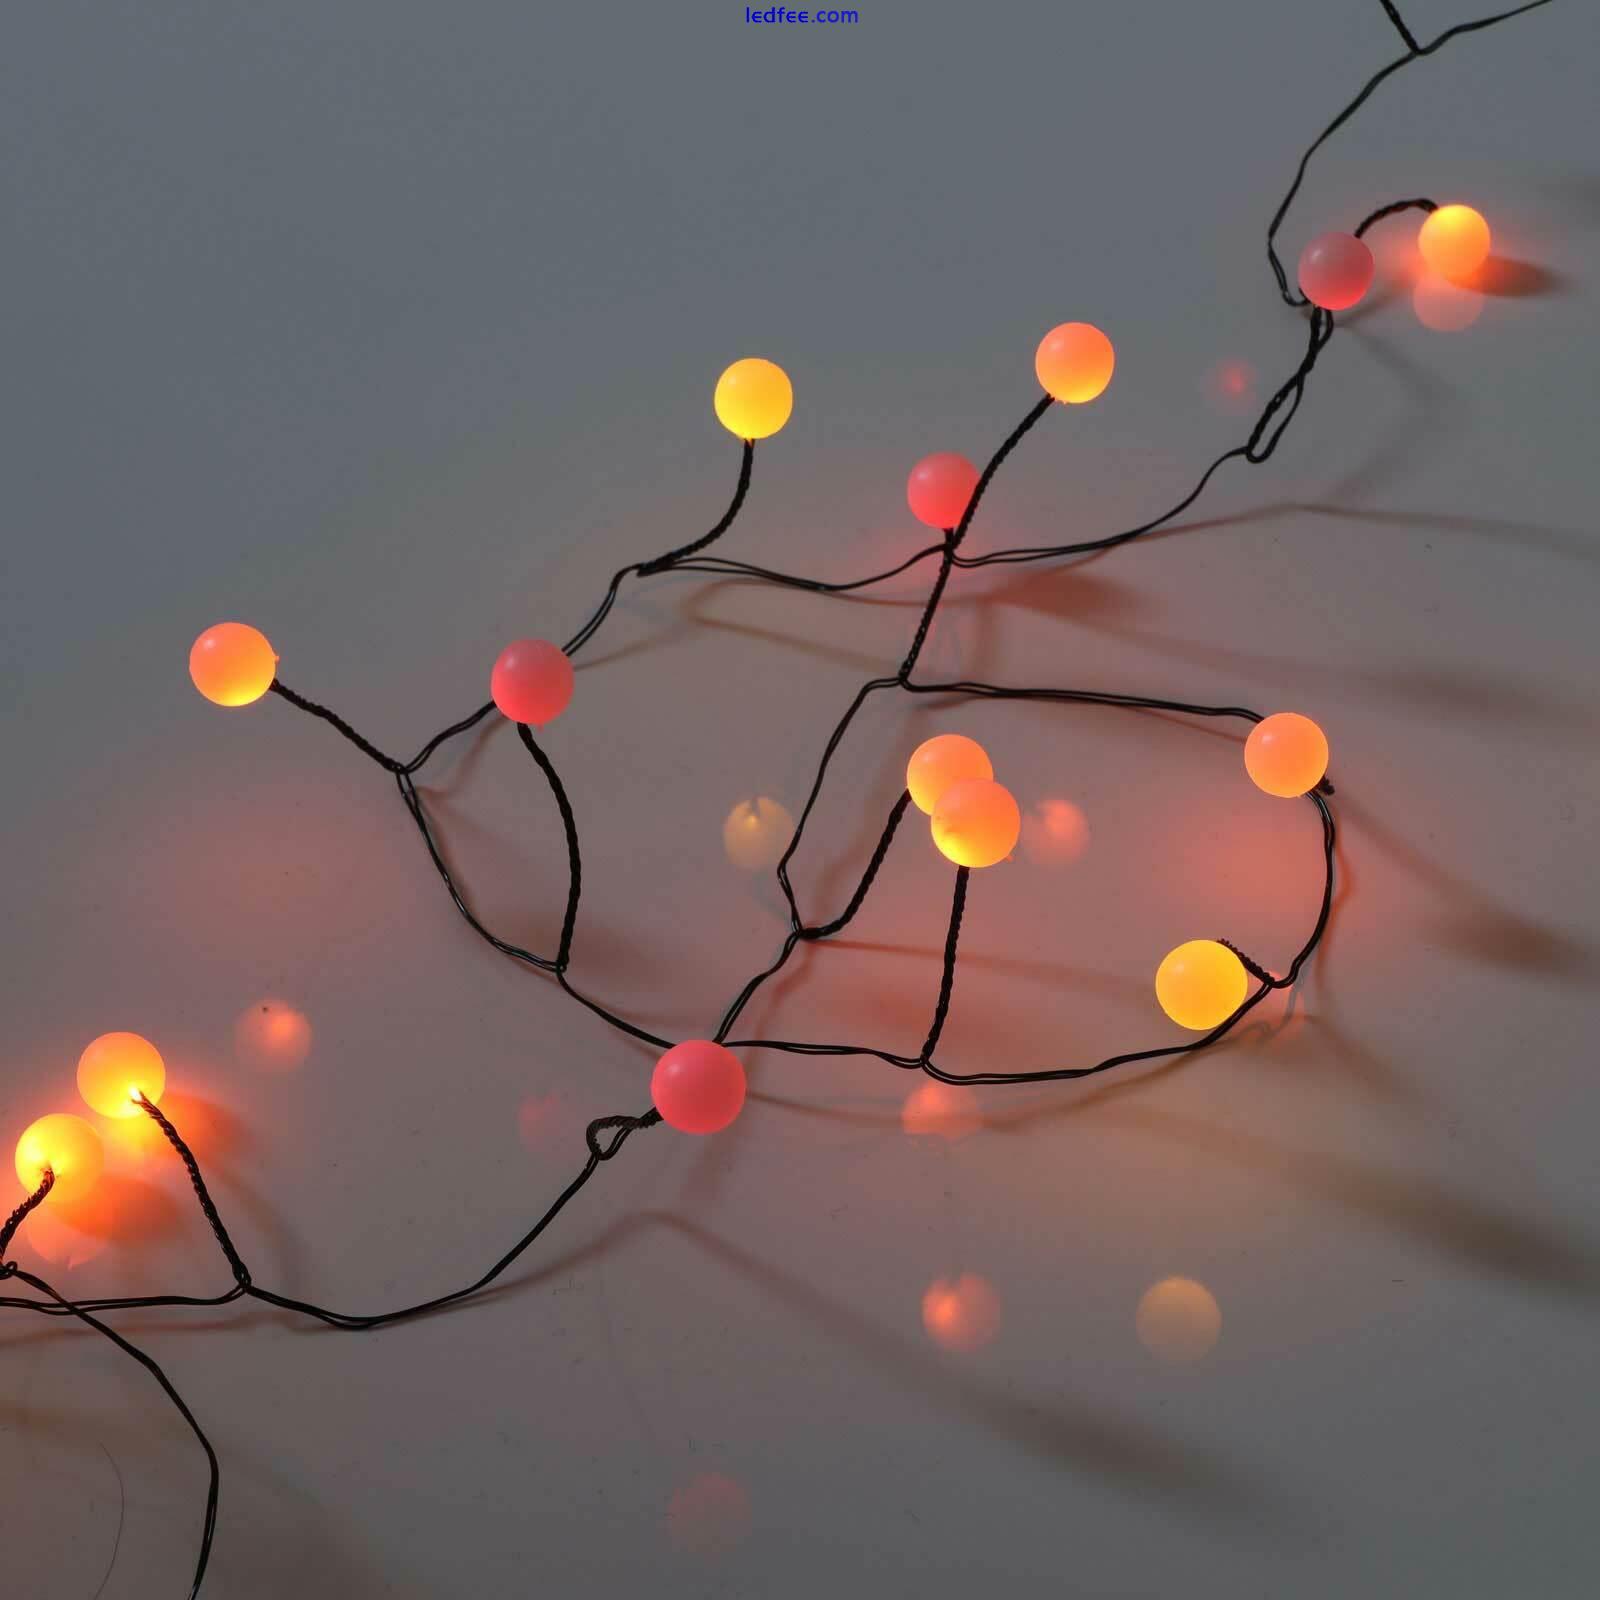 Qbis Fireplace Sunset LED Display Fairy Lights-Red, Orange, Yellow String Lights 5 